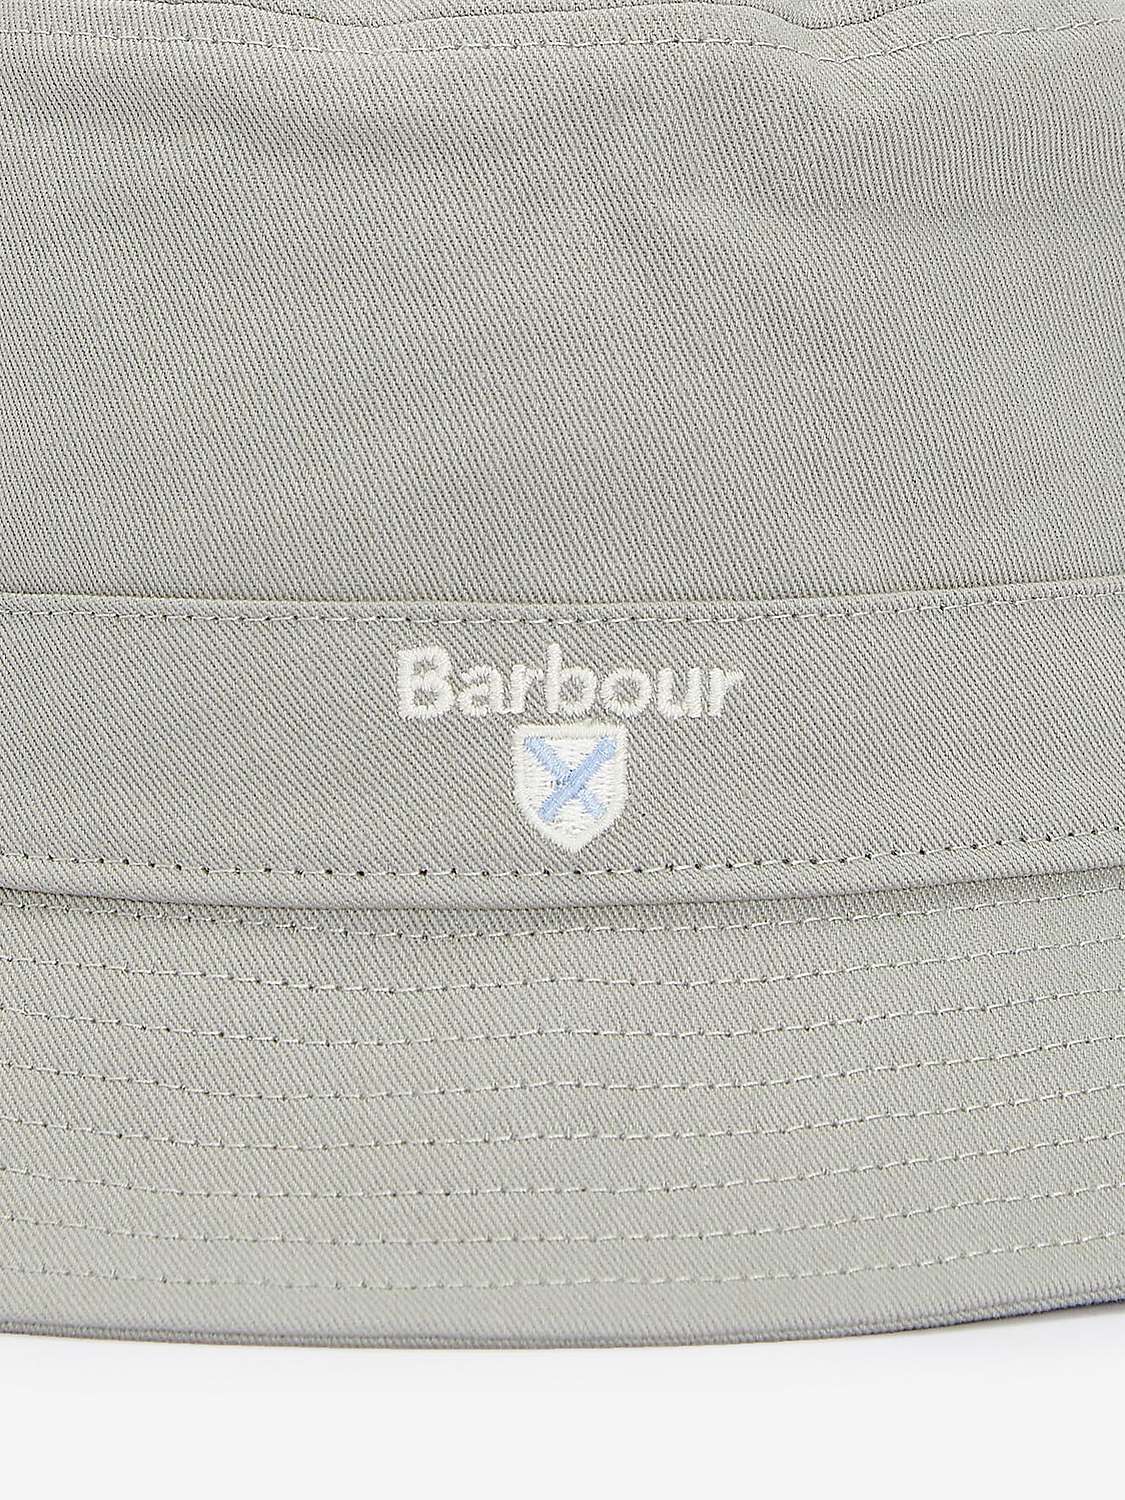 Buy Barbour Classic Bucket Hat Online at johnlewis.com